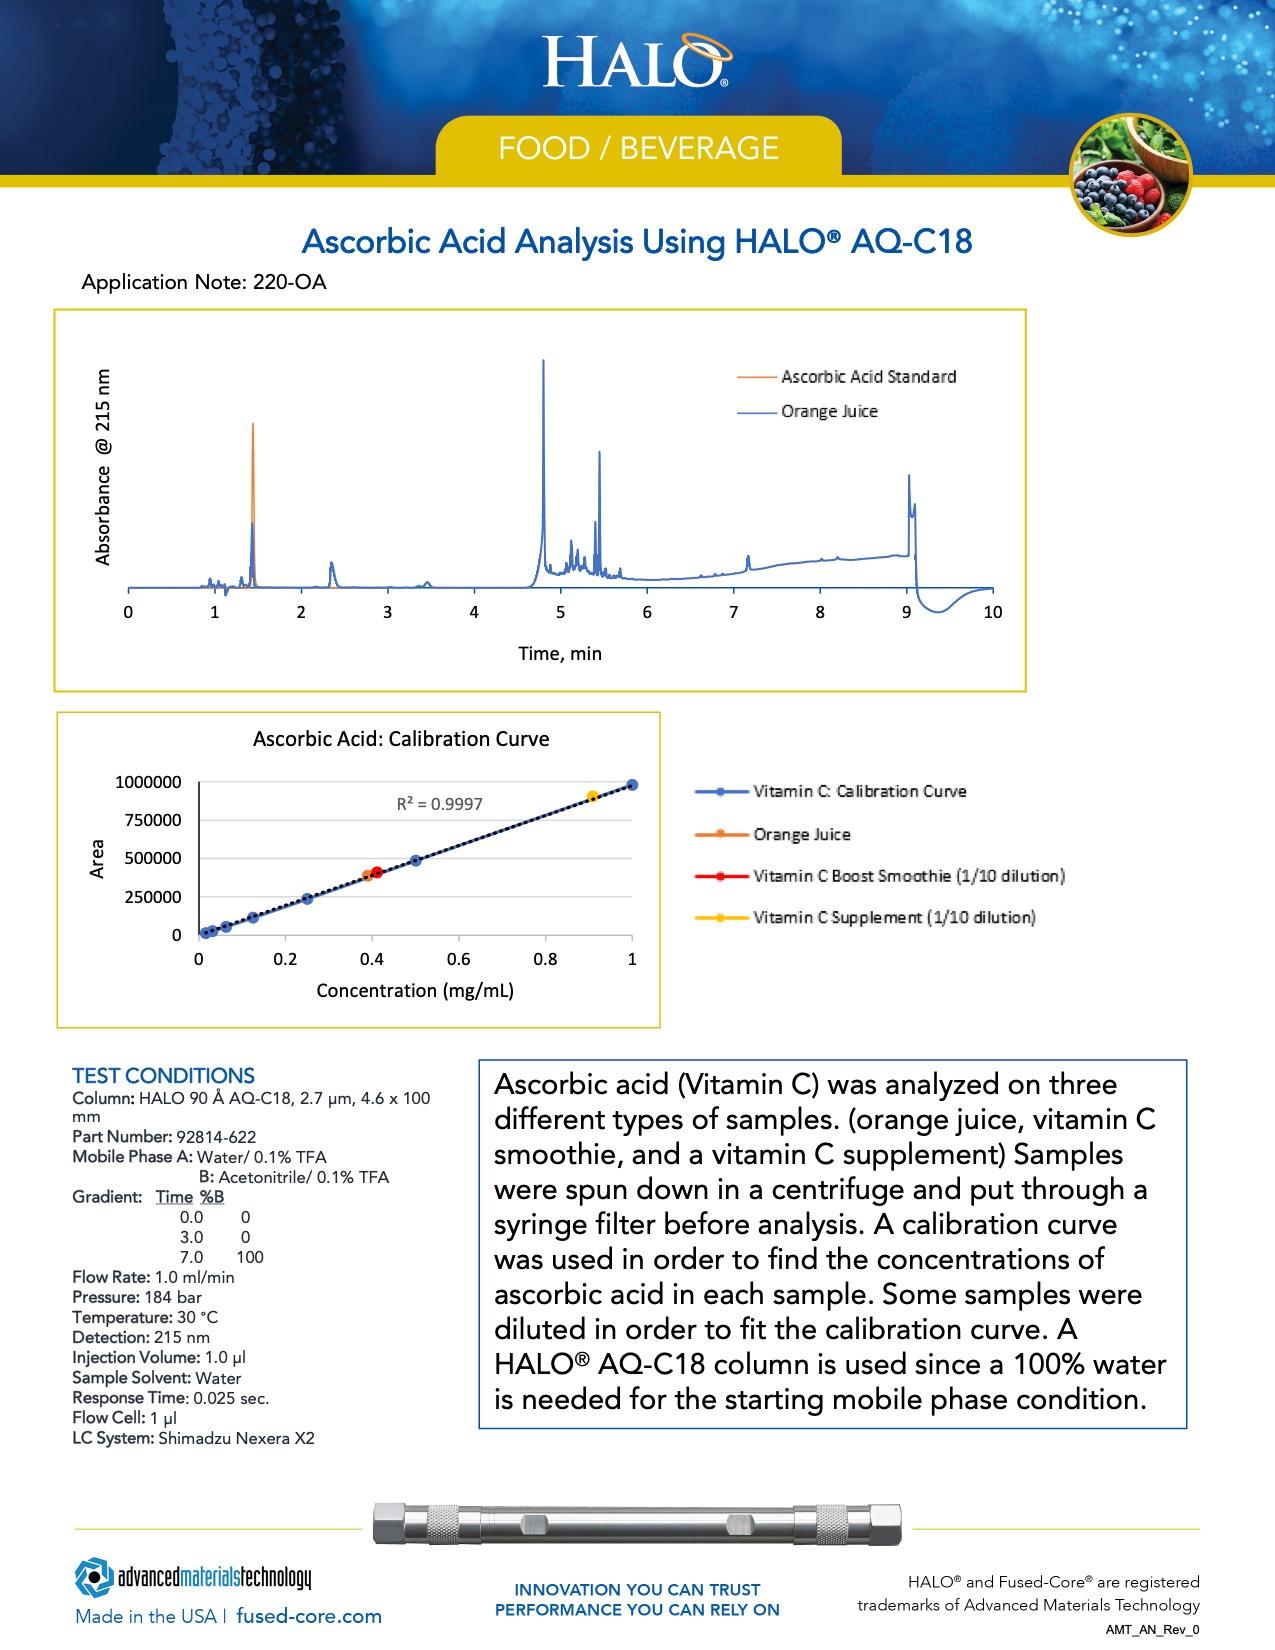 ascorbic acid analysis using halo aq-c18 column